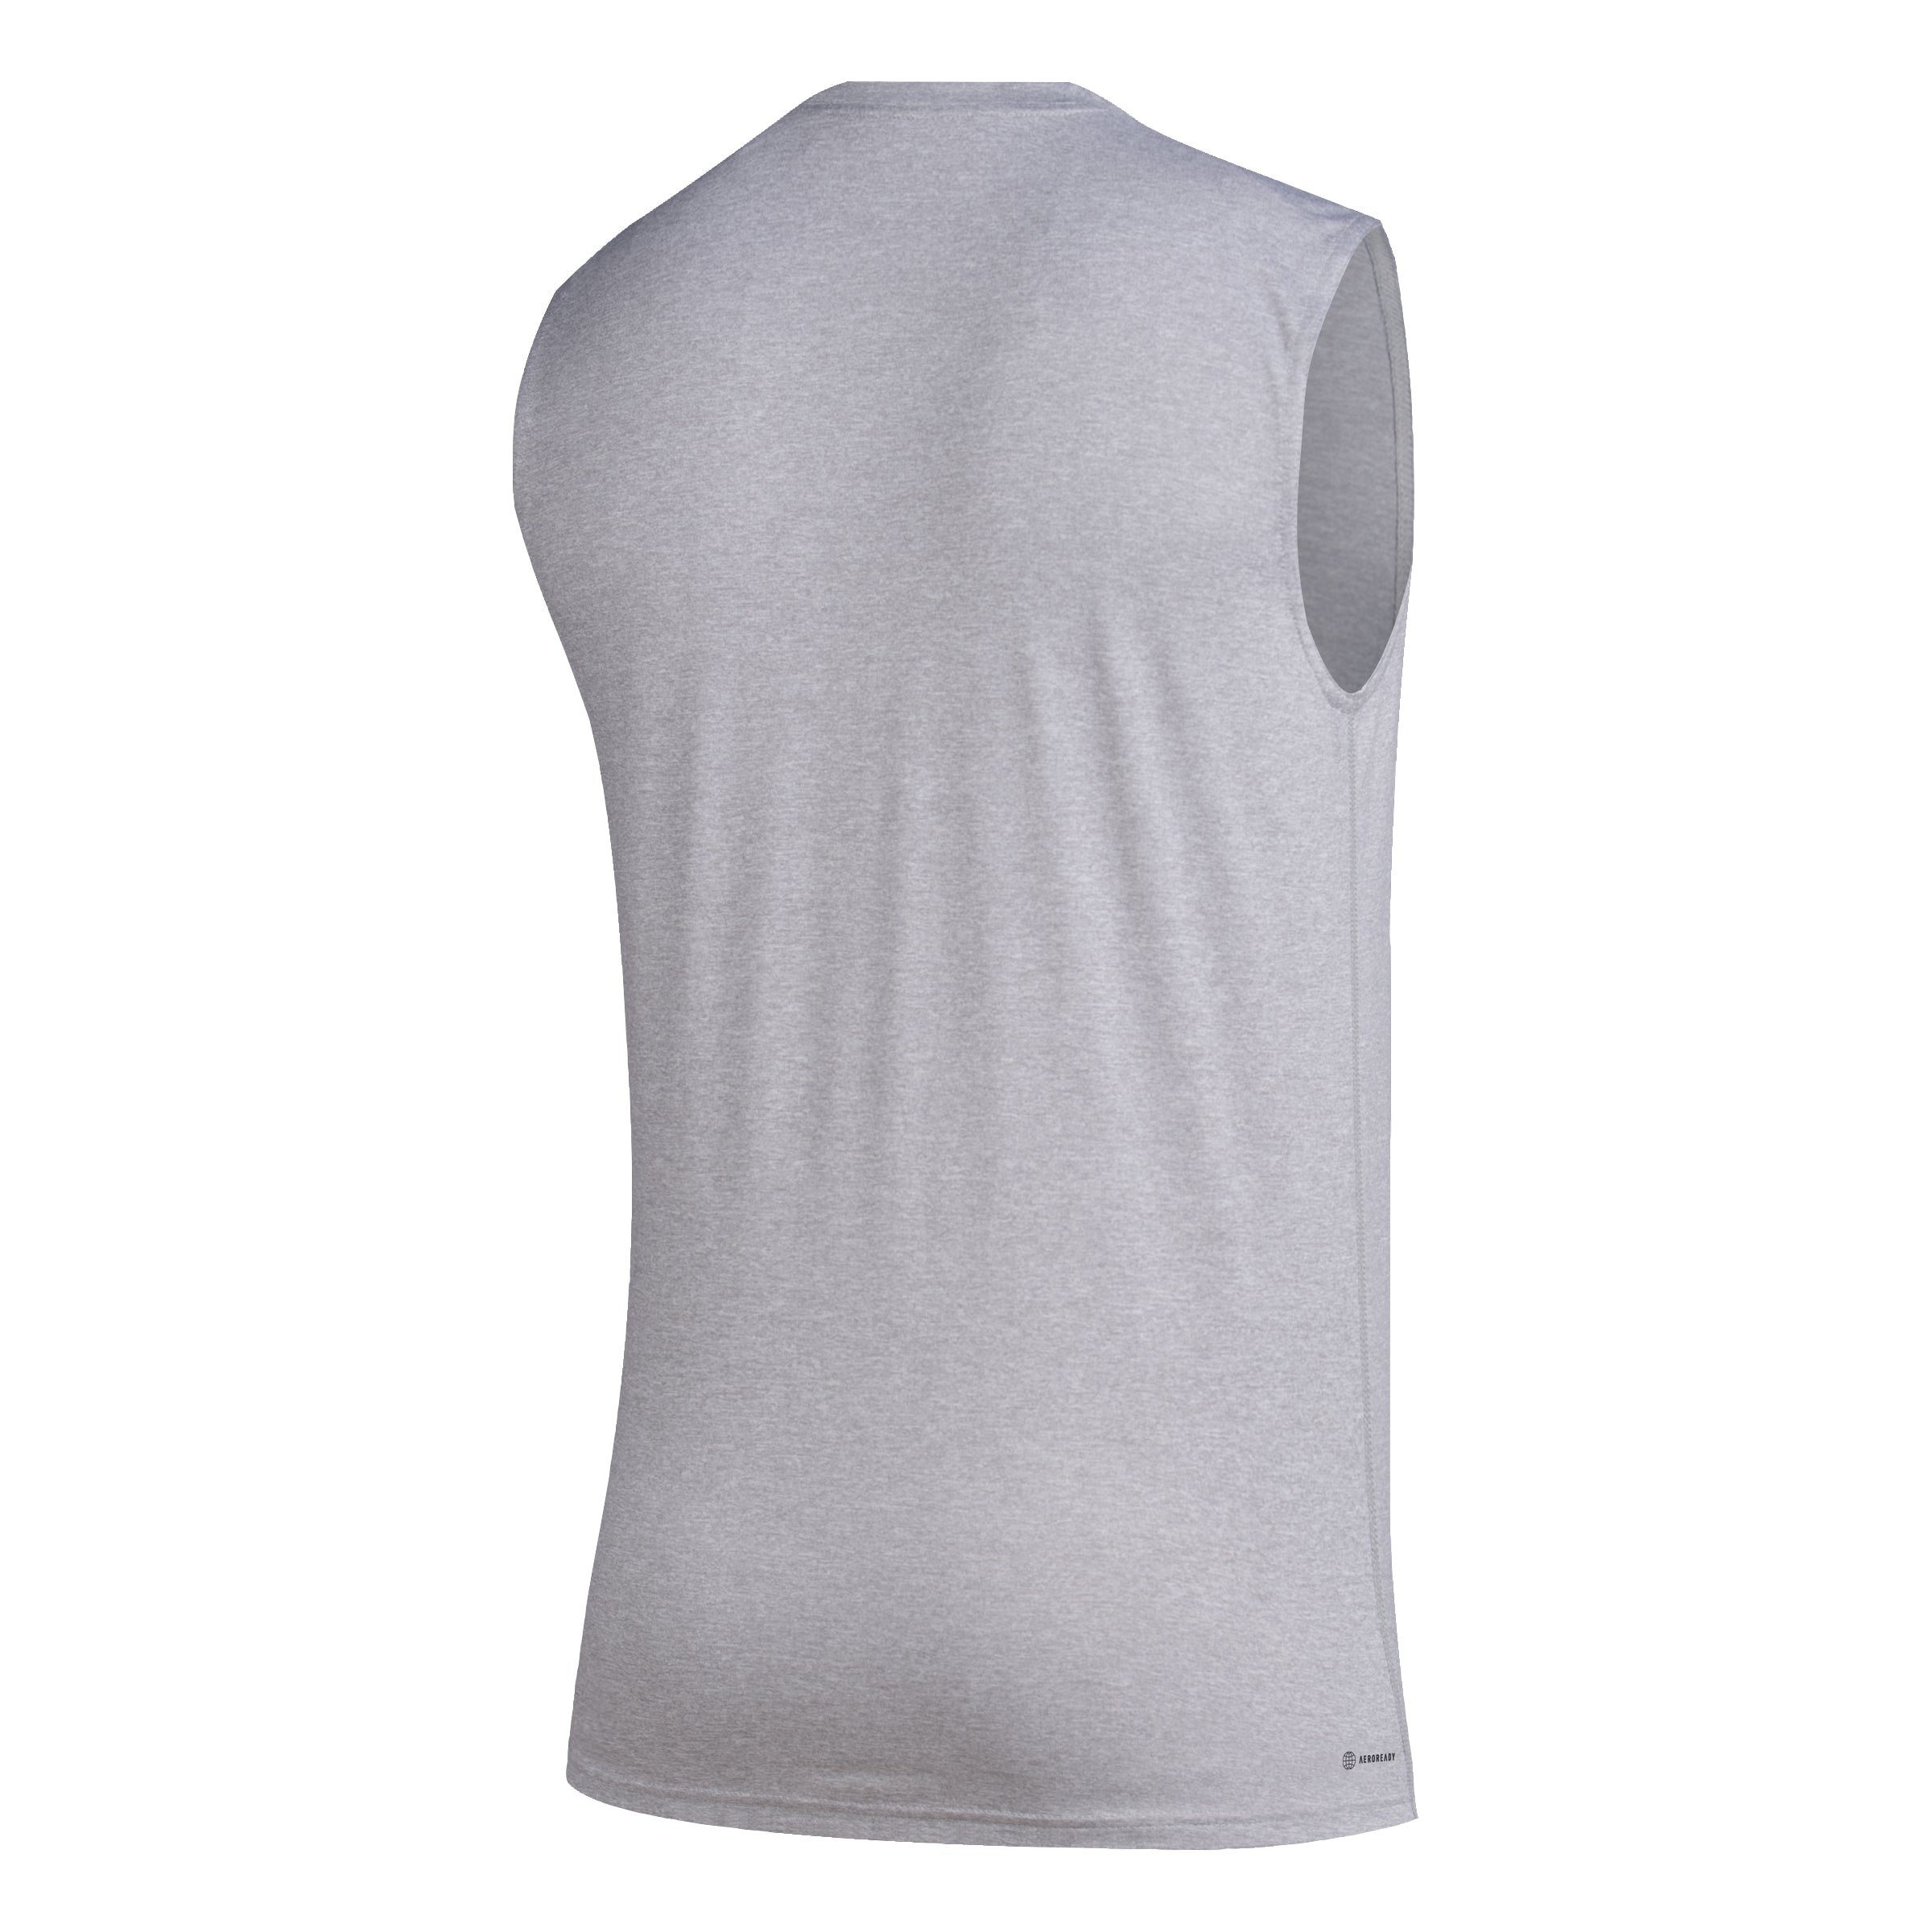 Miami Hurricanes adidas Primary Logo Sleeveless Shirt - Grey